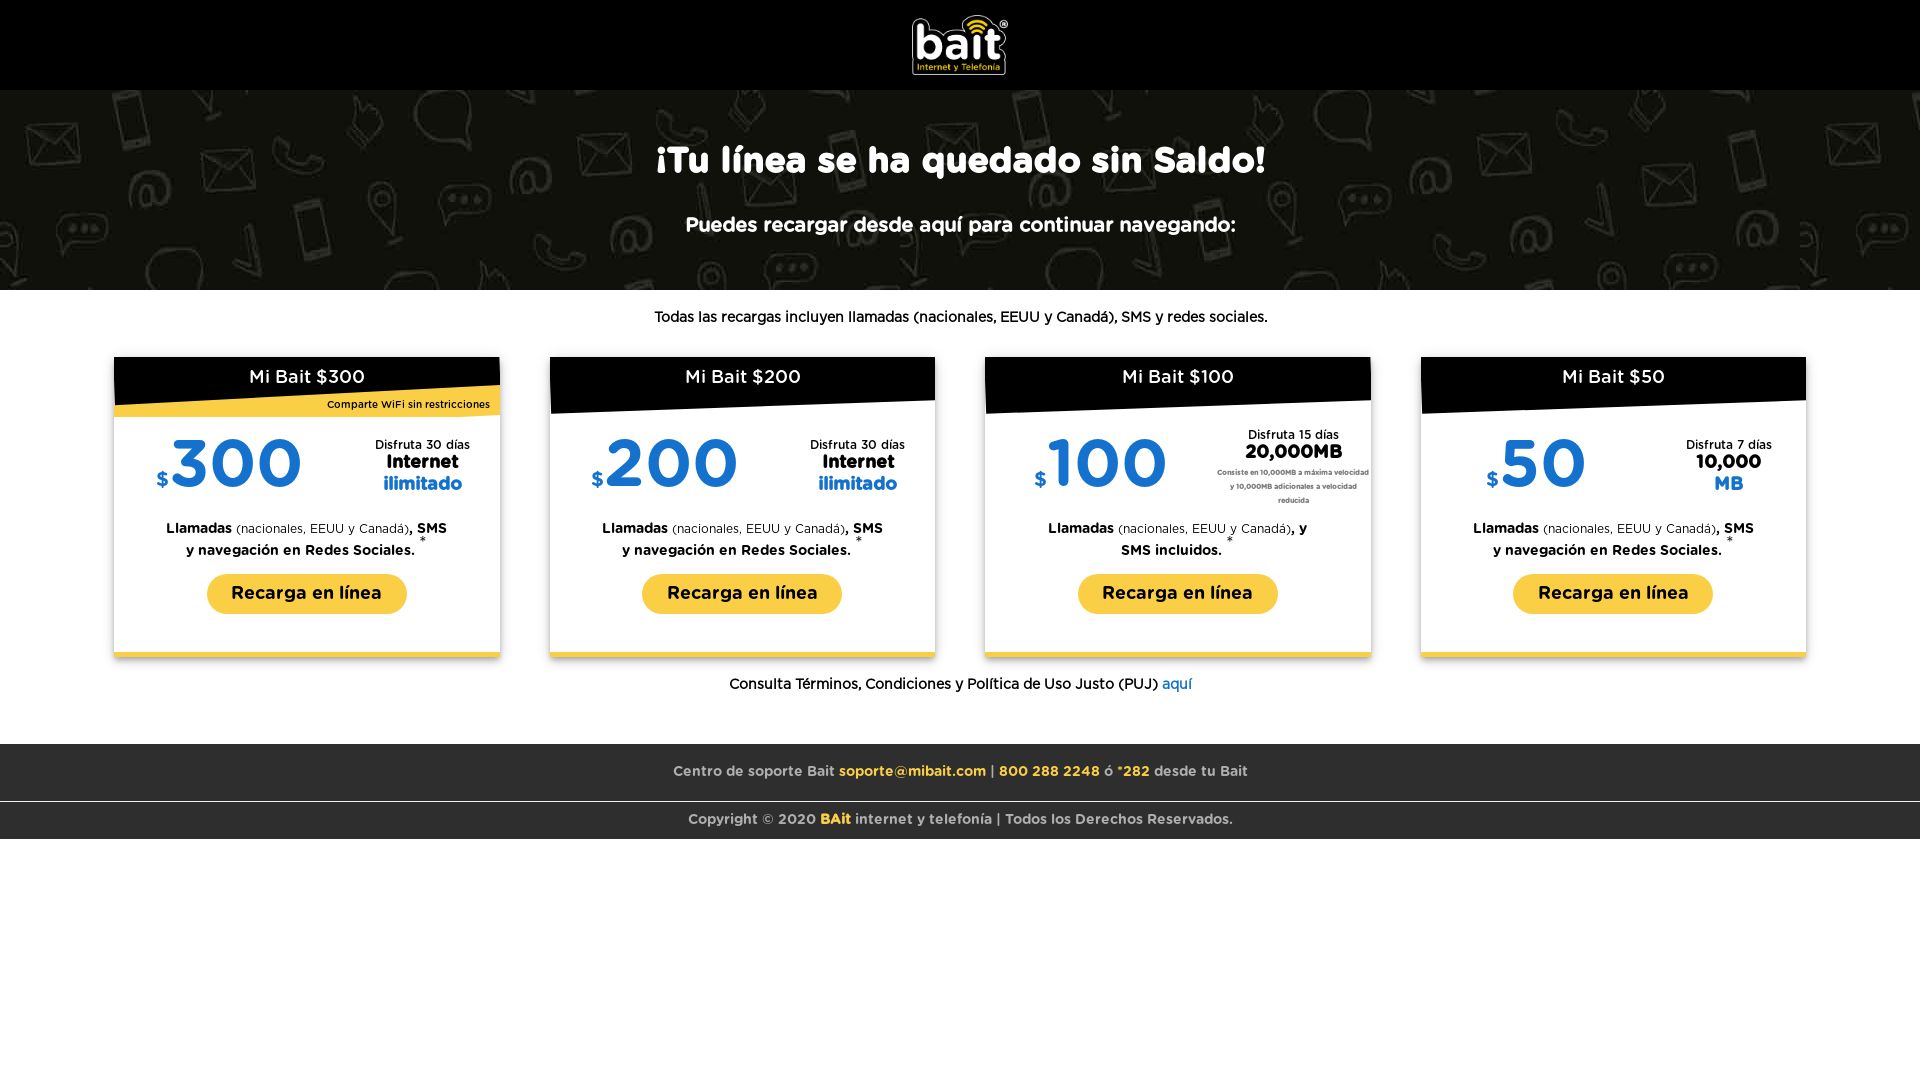 Website status cautivo.baitmexico.com is   ONLINE